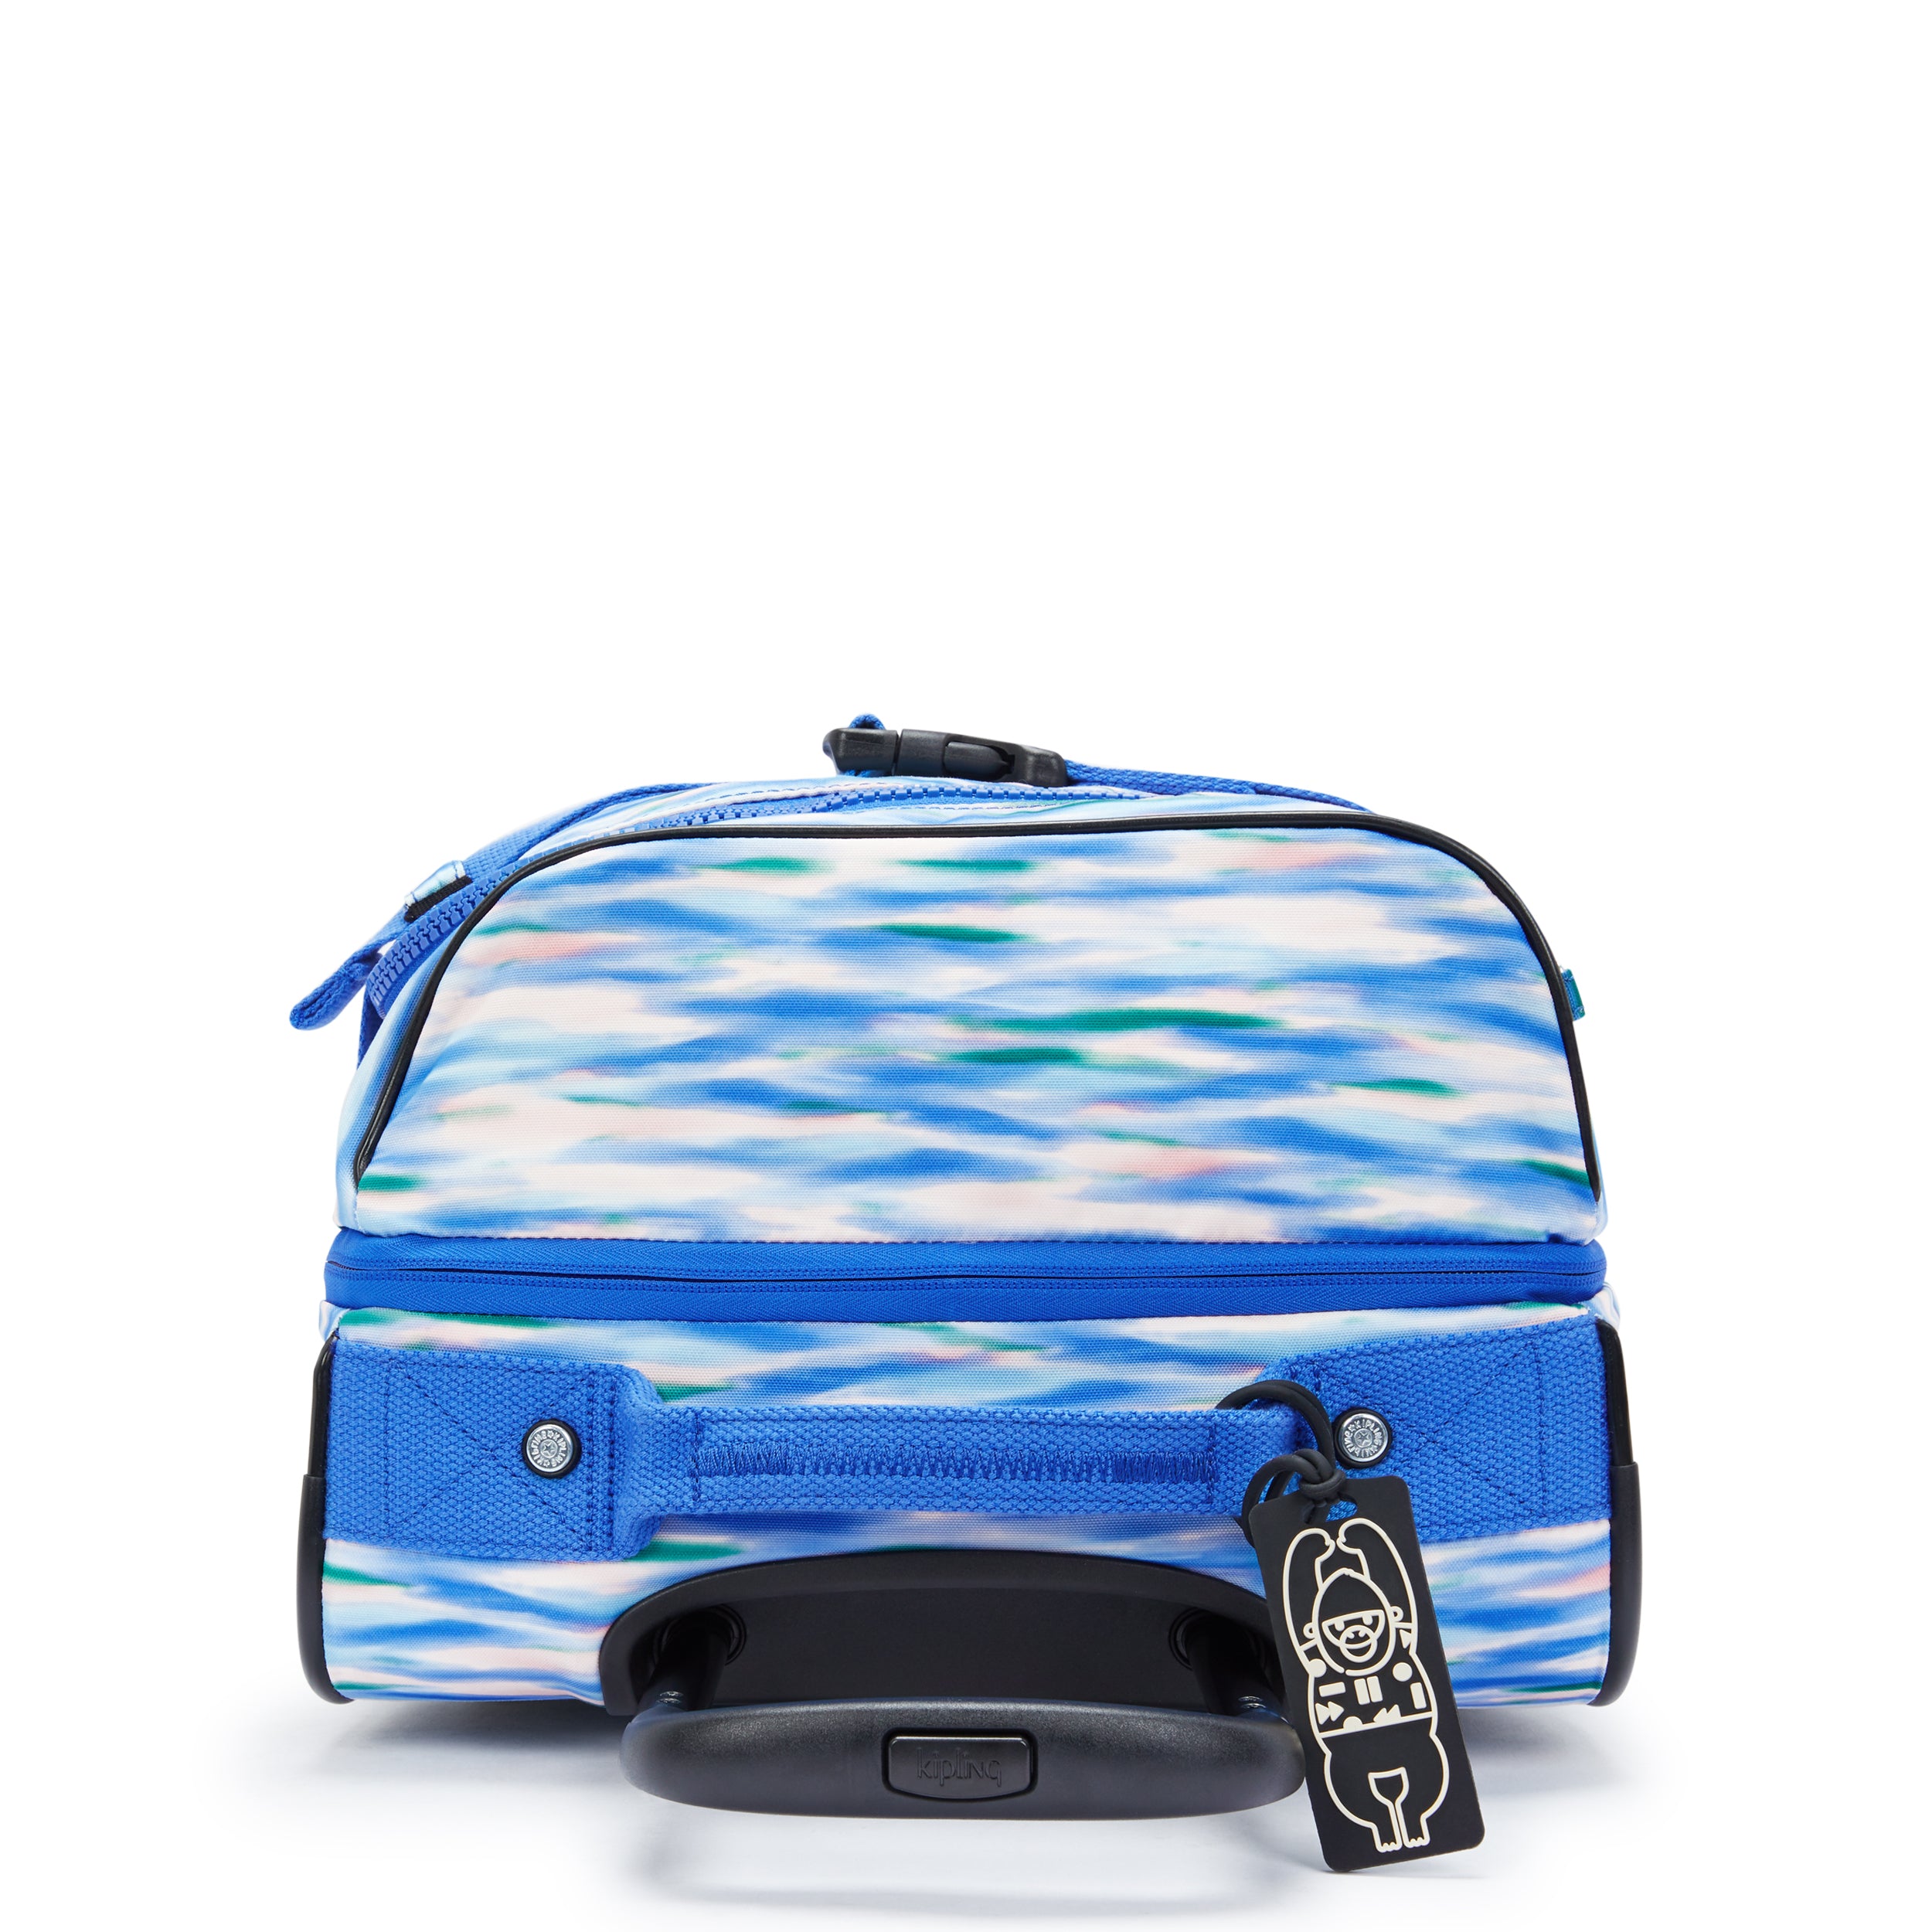 KIPLING-Aviana S-Small wheeled luggage-Diluted Blue-I7428-TX9